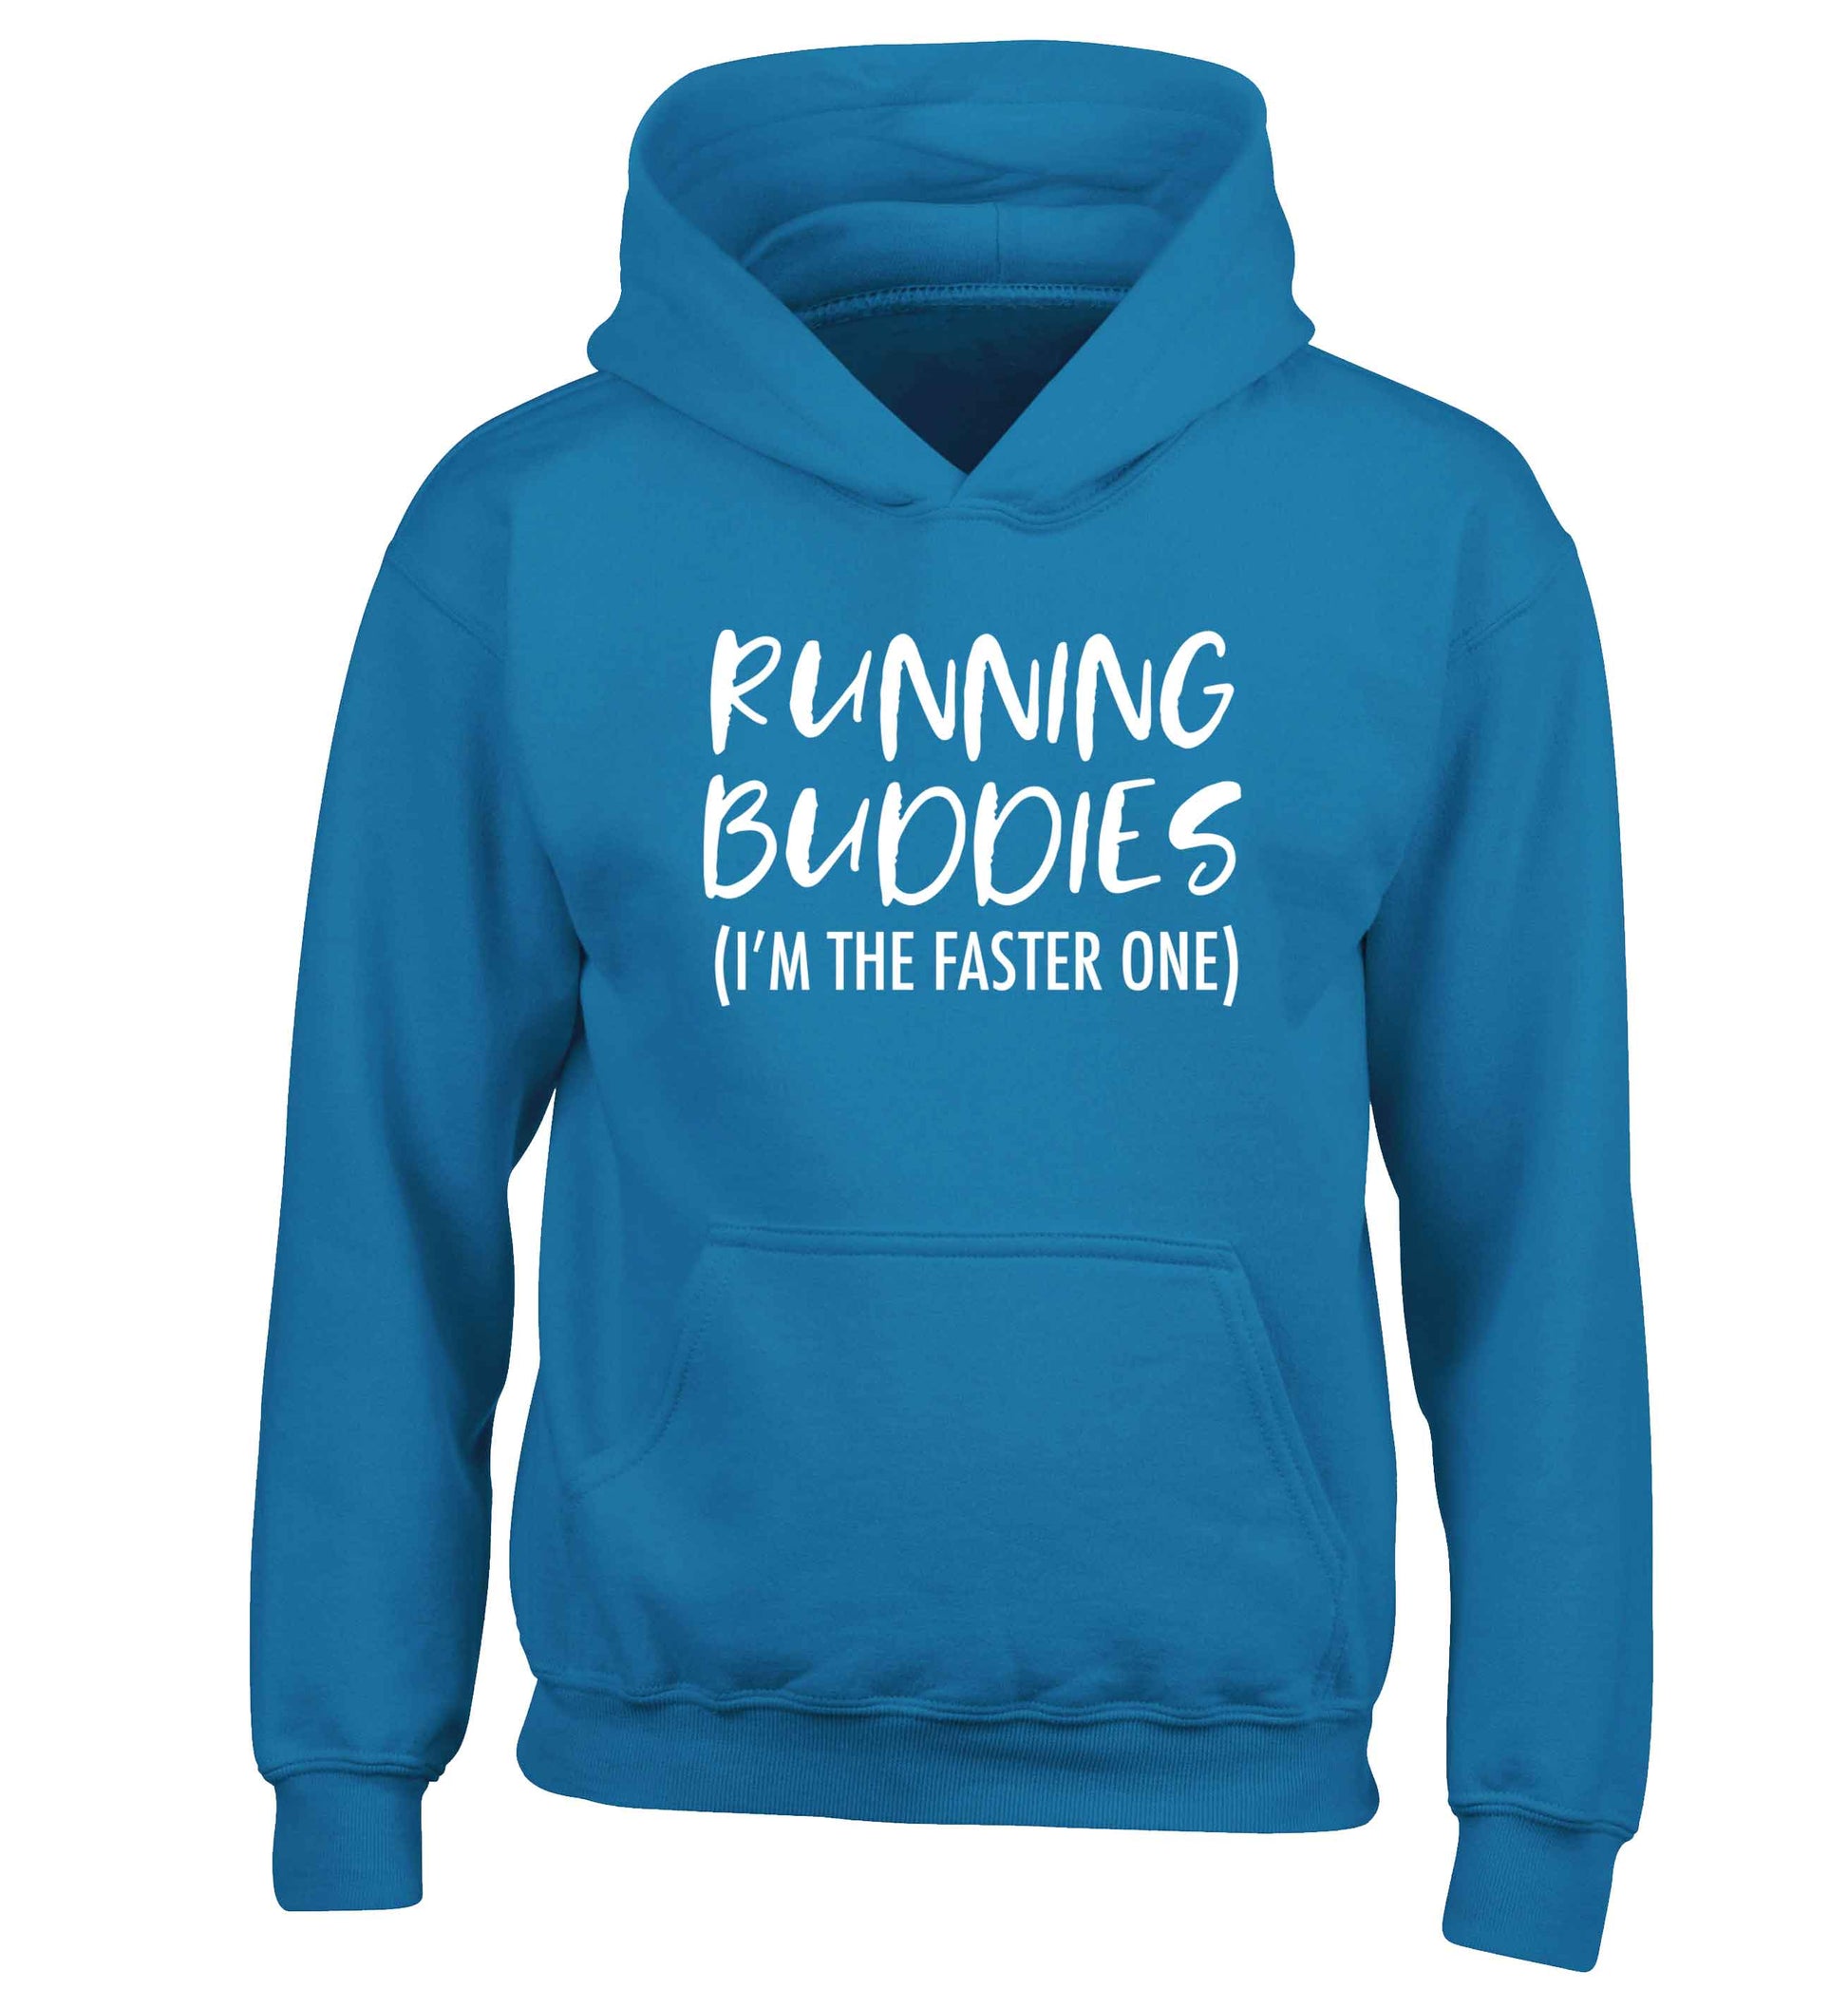 Running buddies (I'm the faster one) children's blue hoodie 12-13 Years